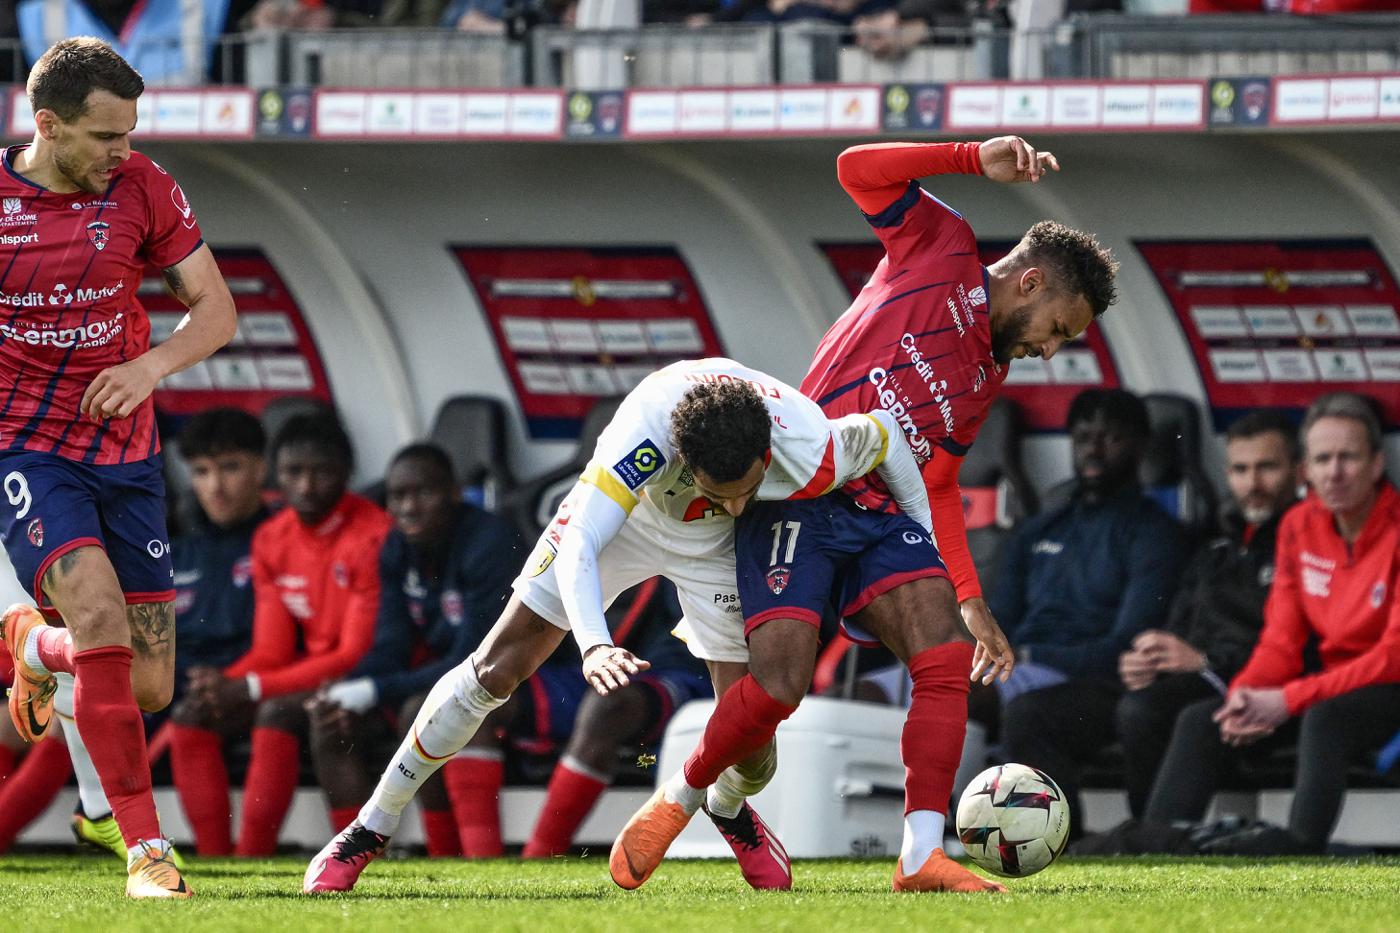 Clermont - Lans - 0:4. French Premier League, round 27. Match Review, Statistics